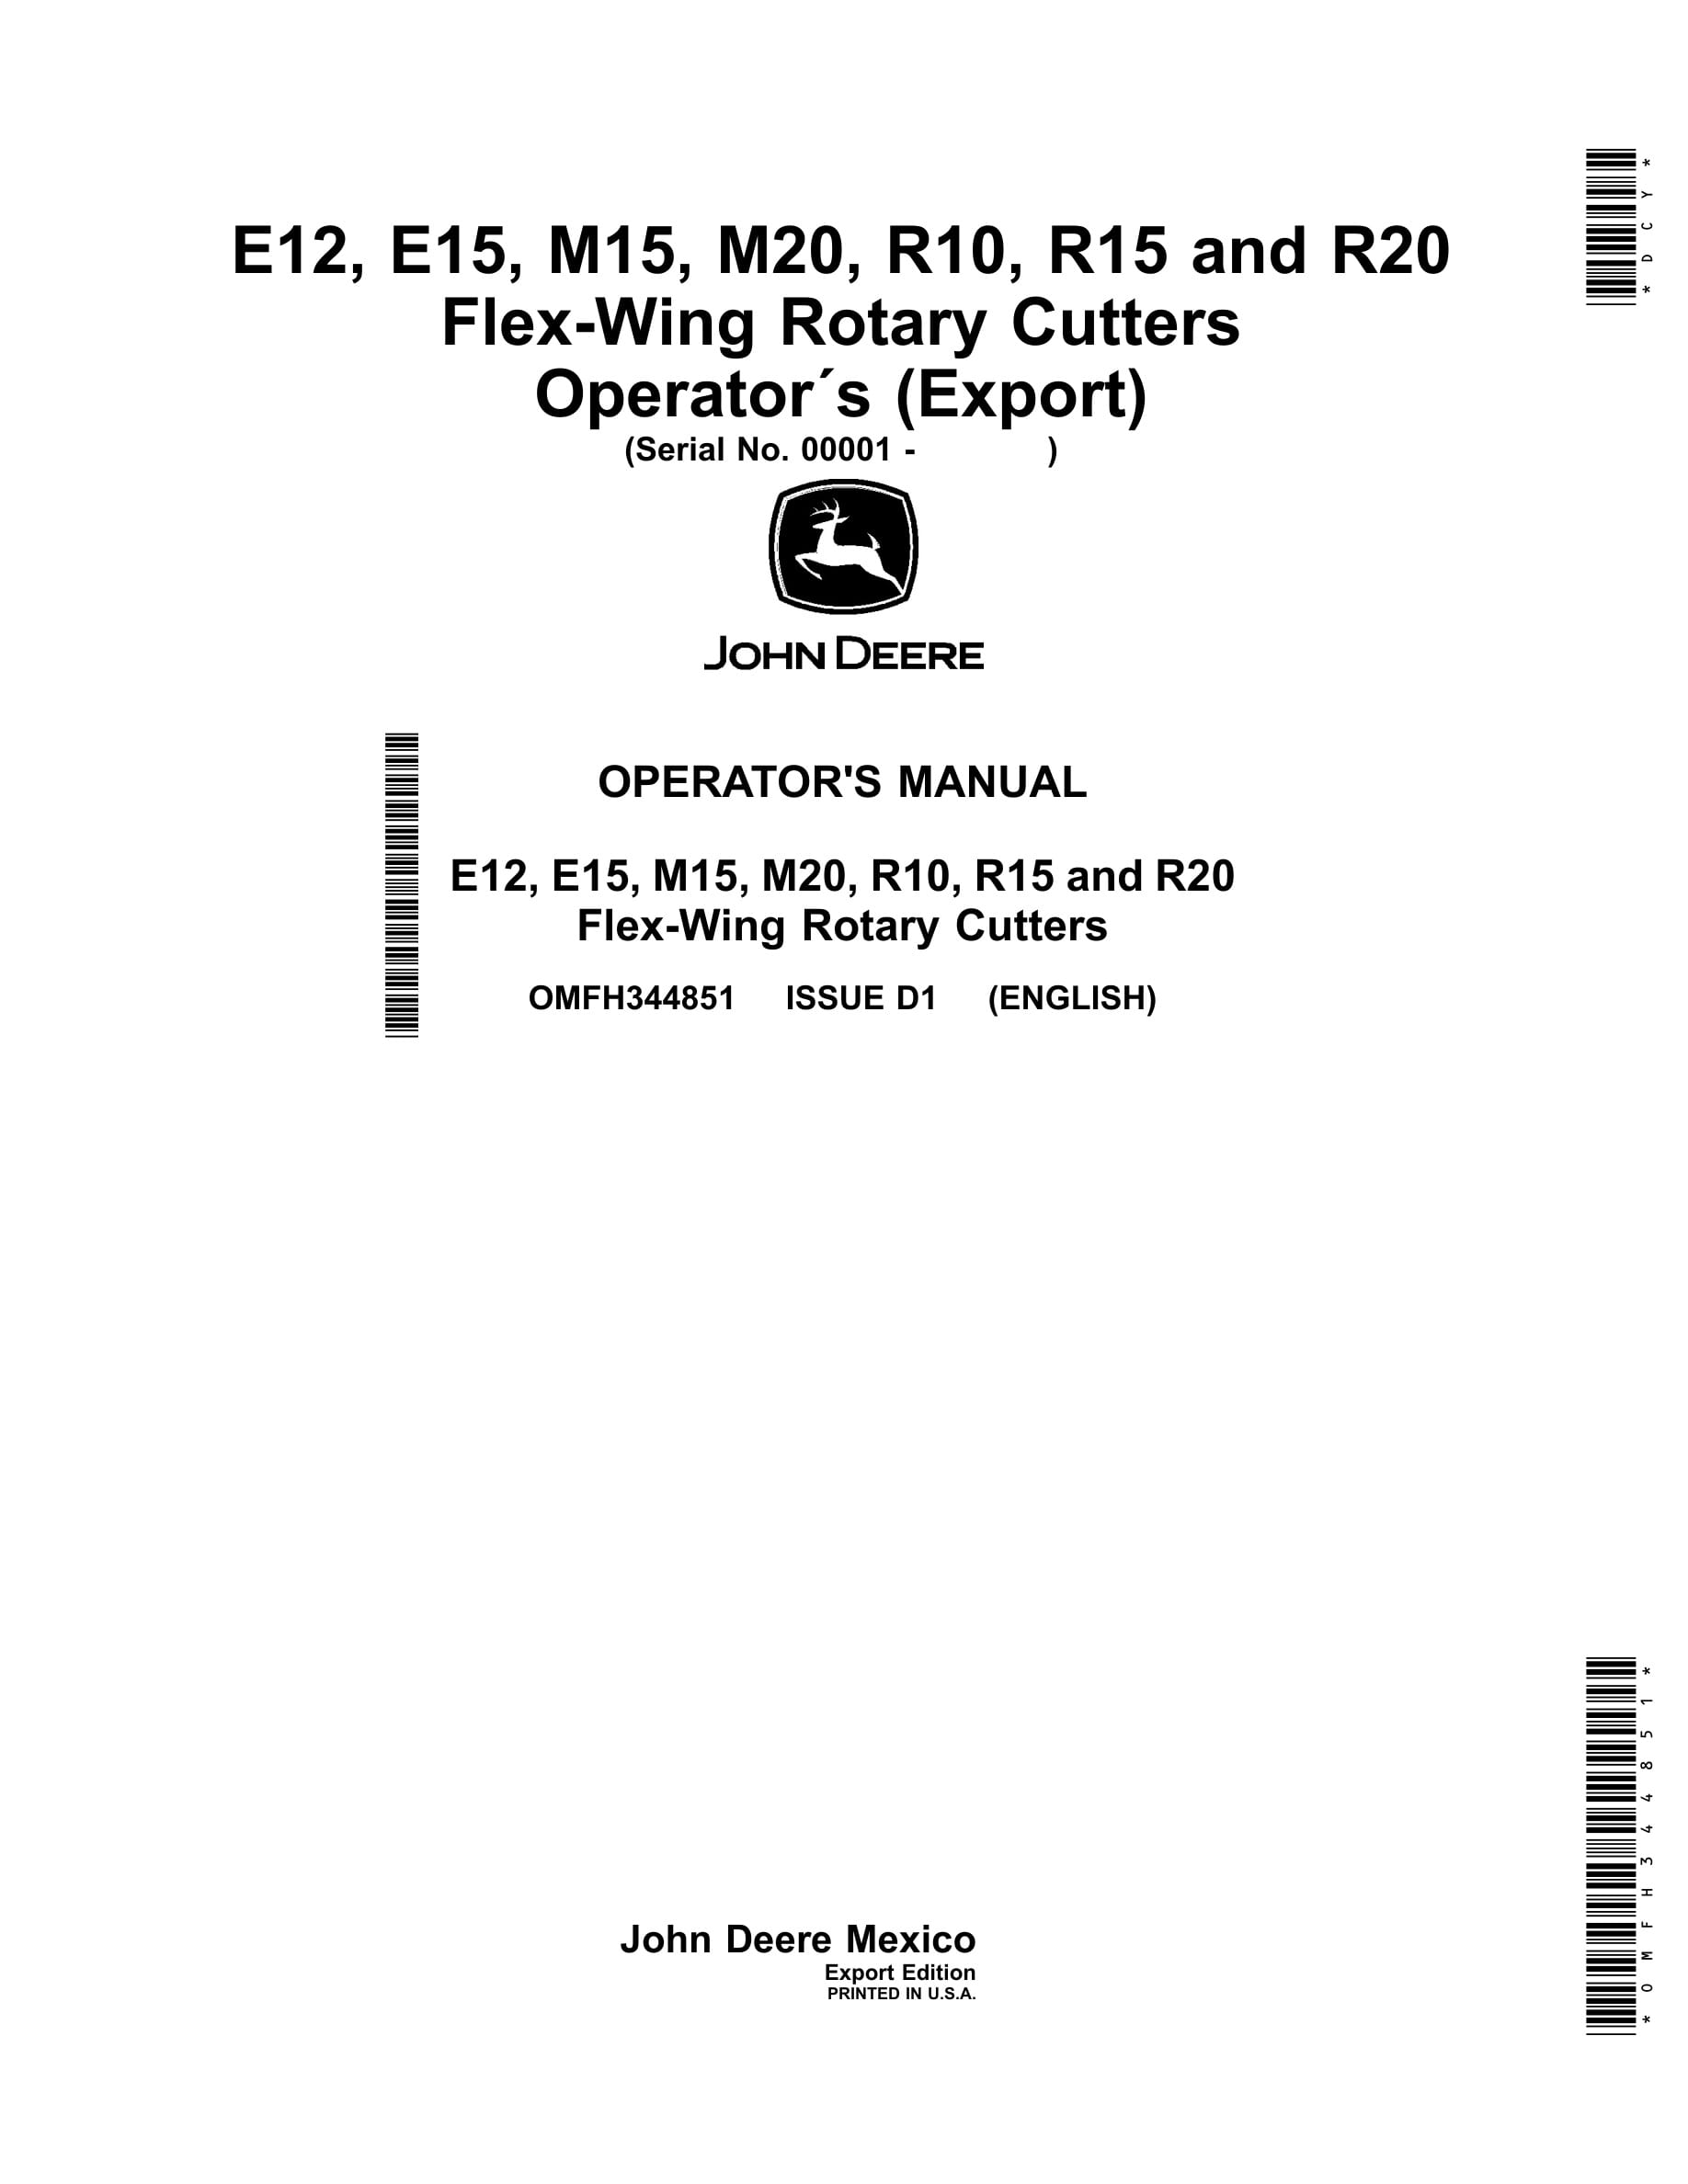 John Deere E12, E15, M15, M20, R10, R15 and R20 Flex Operator Manual OMFH344851-1